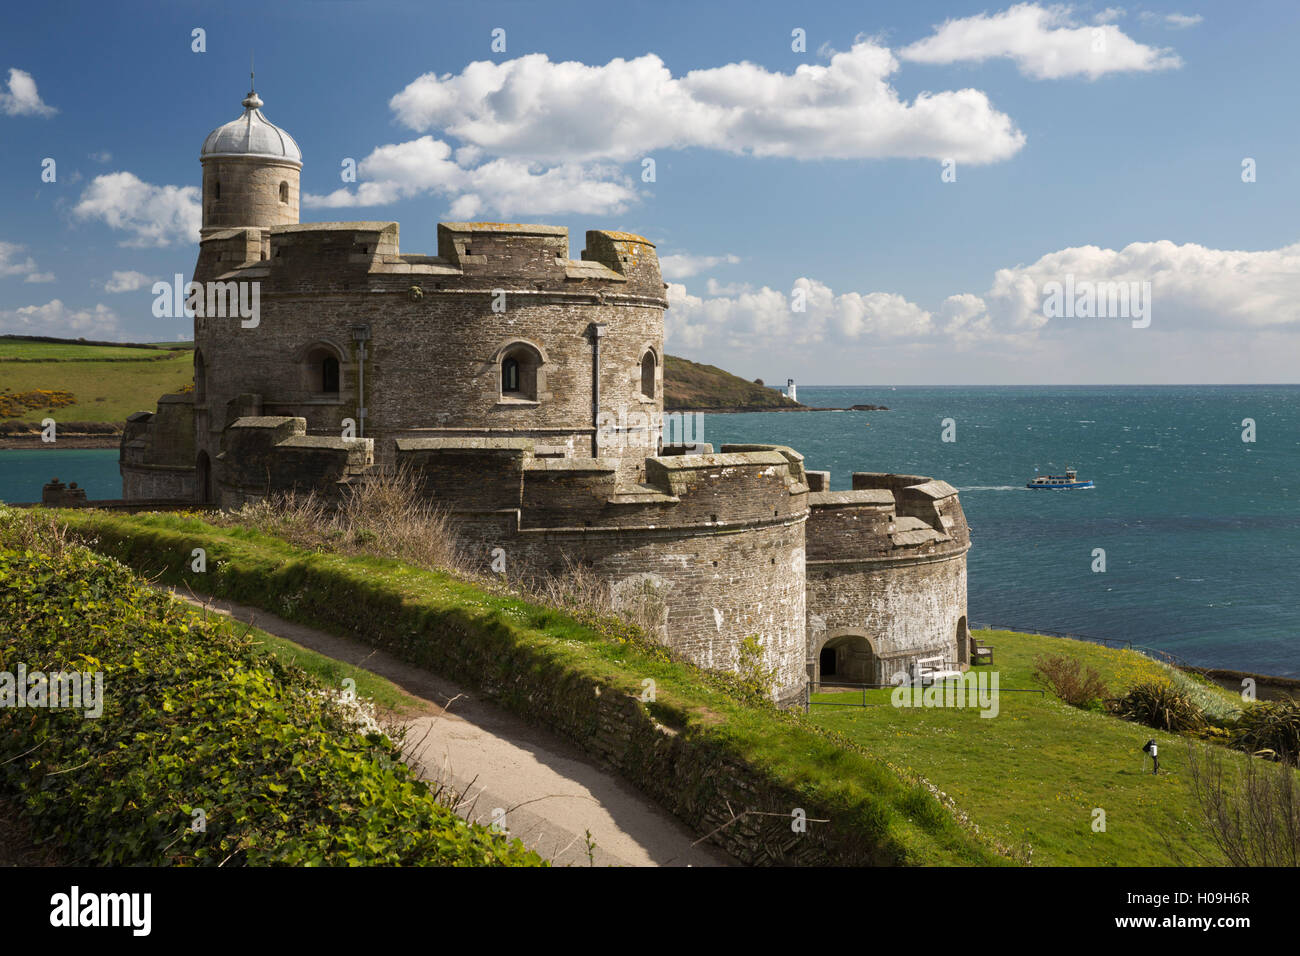 St. Mawes Castle and coastline, St. Mawes, Cornwall, England, United Kingdom, Europe Stock Photo